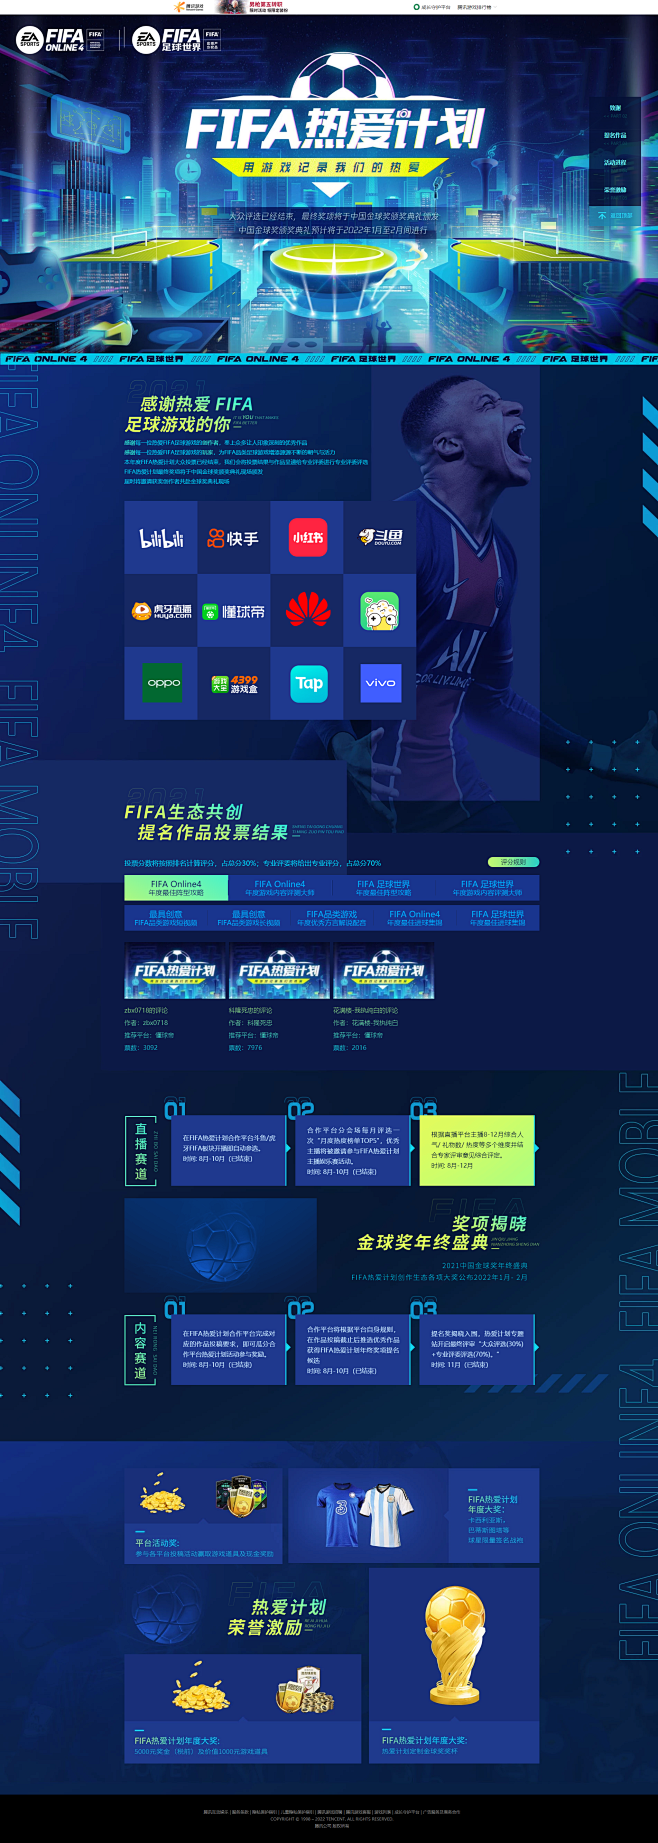 FIFA热爱计划-FIFA Online...